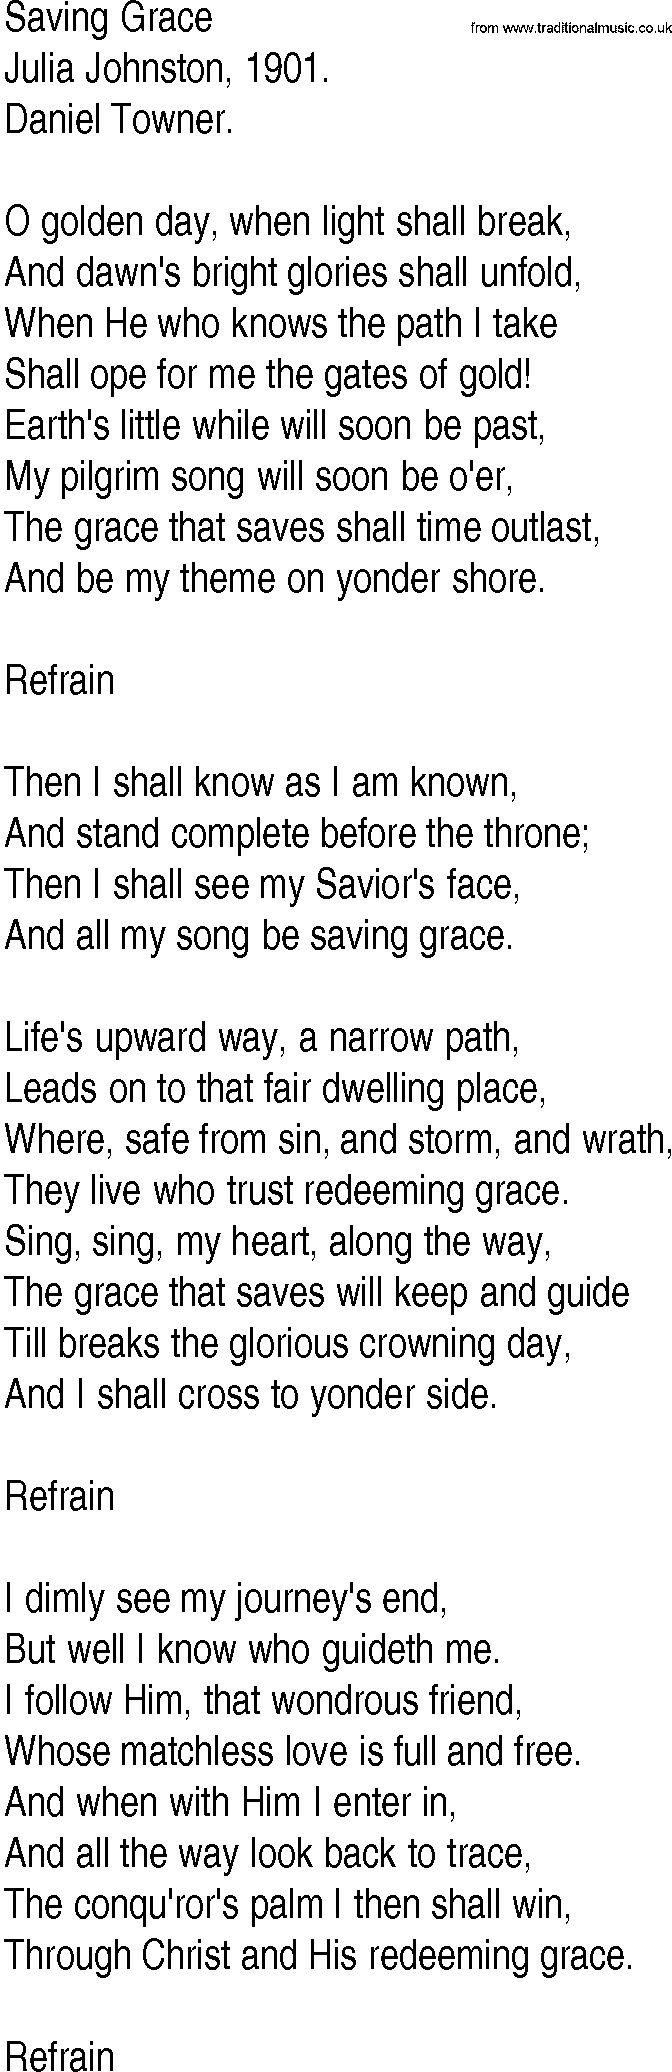 Hymn and Gospel Song: Saving Grace by Julia Johnston lyrics